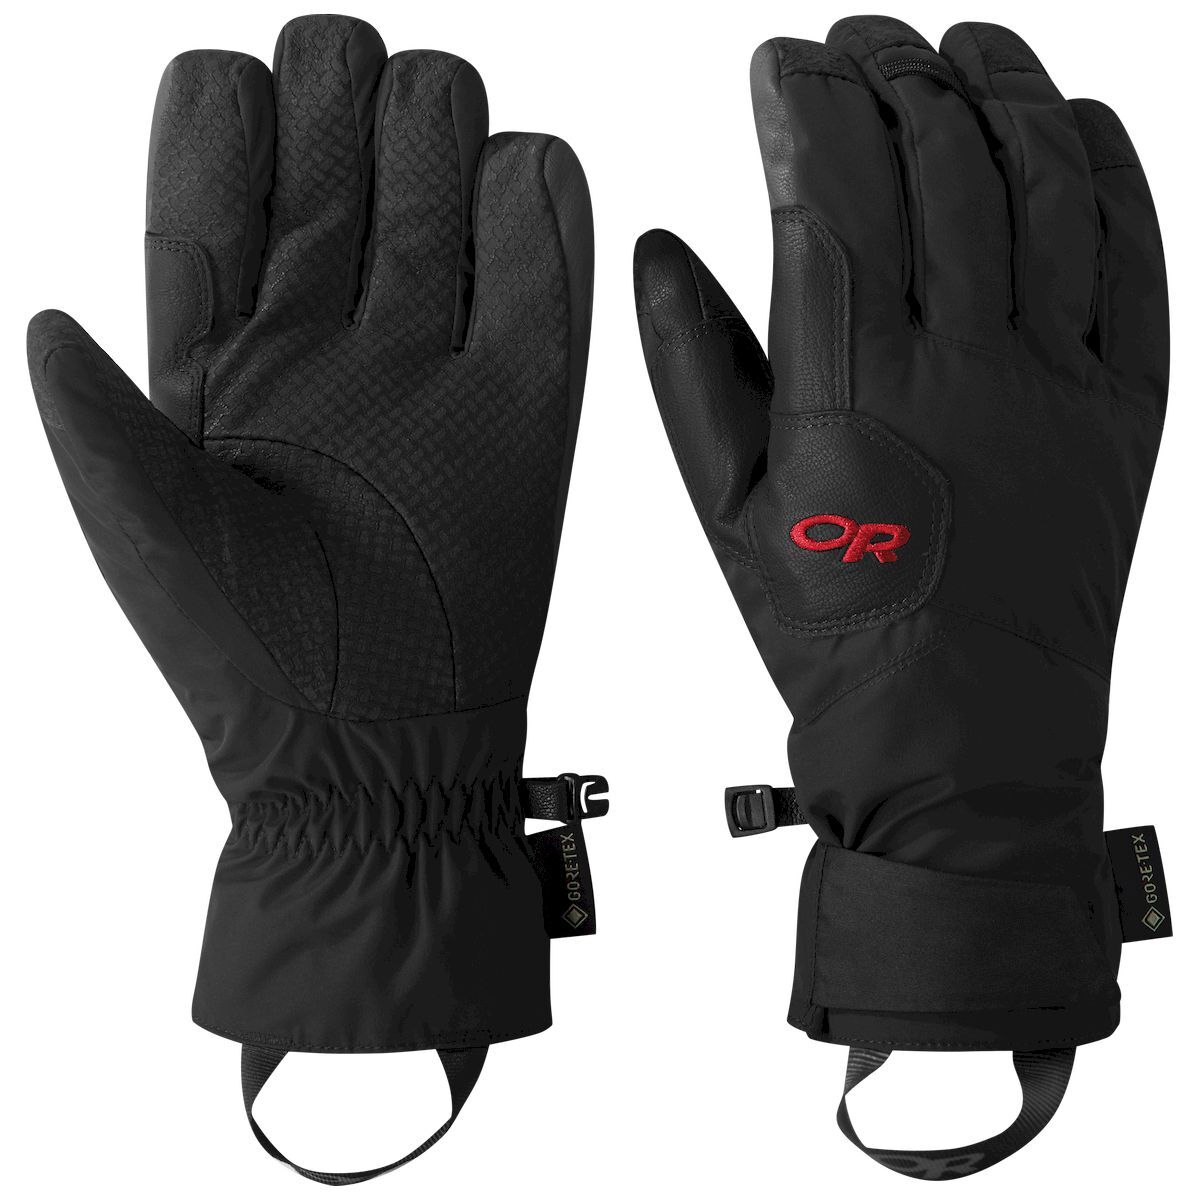 Outdoor Research Bitterblaze Aerogel Gloves  - Gloves - Men's